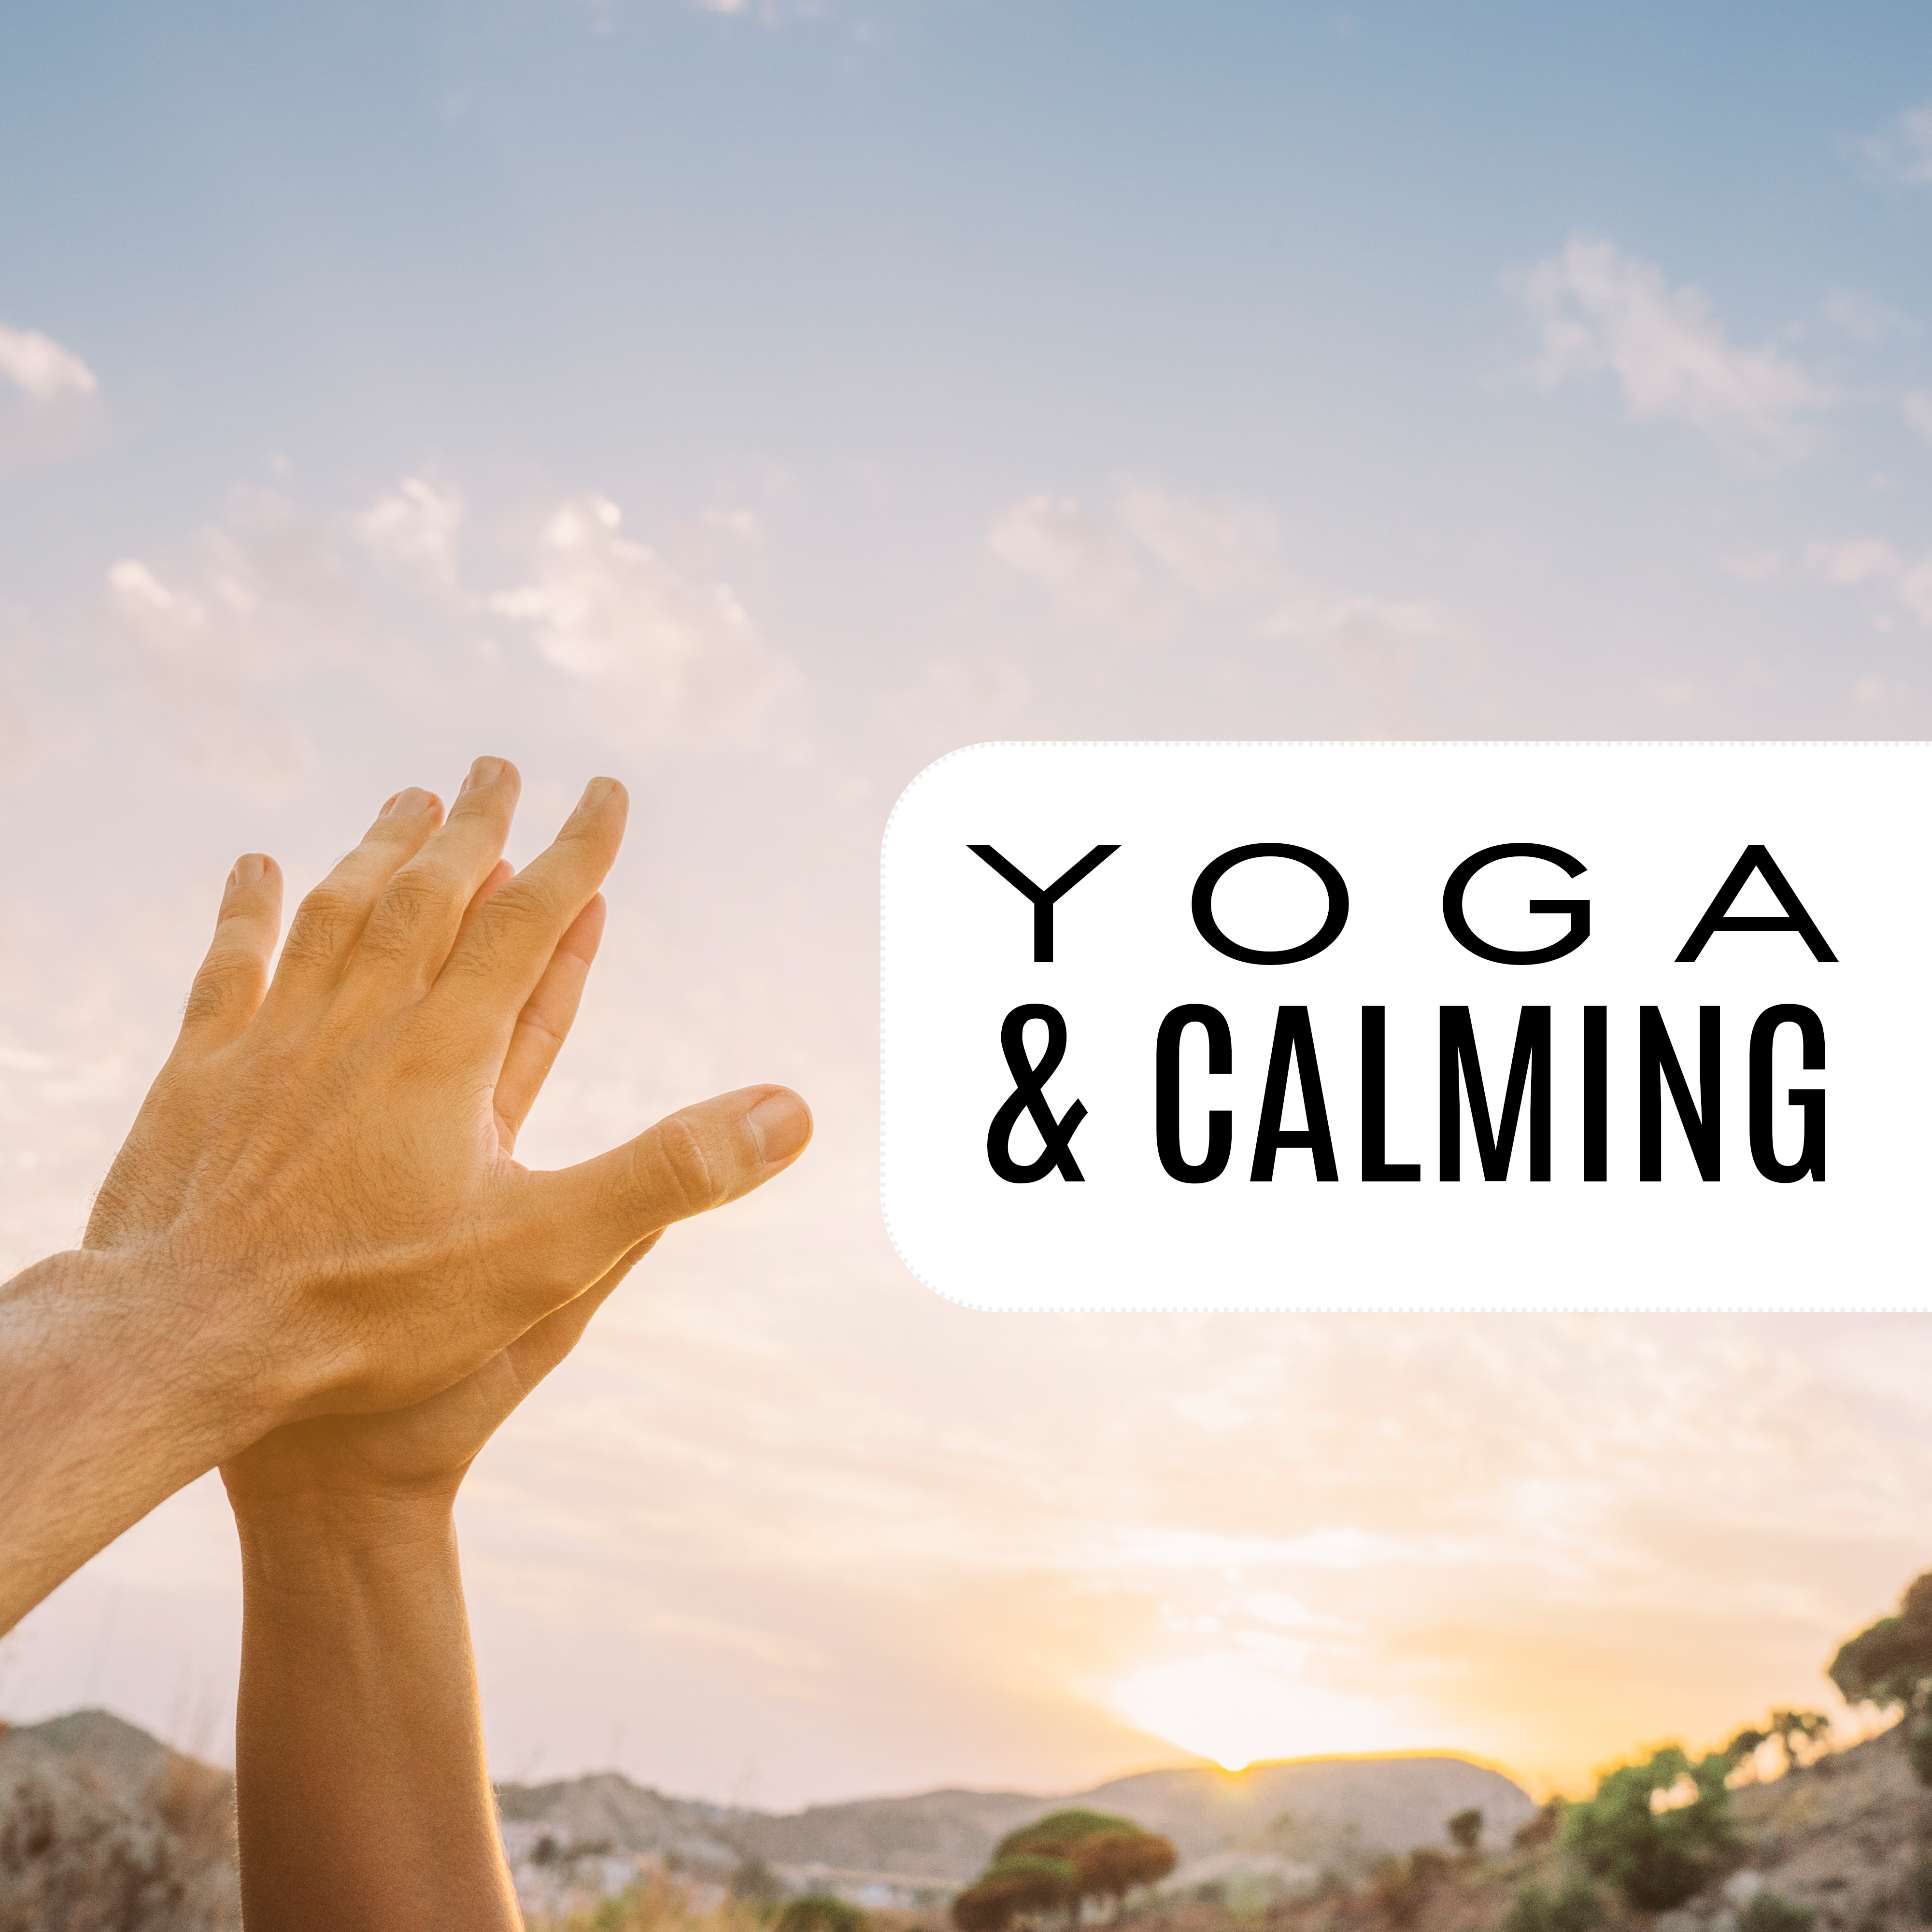 Yoga & Calming